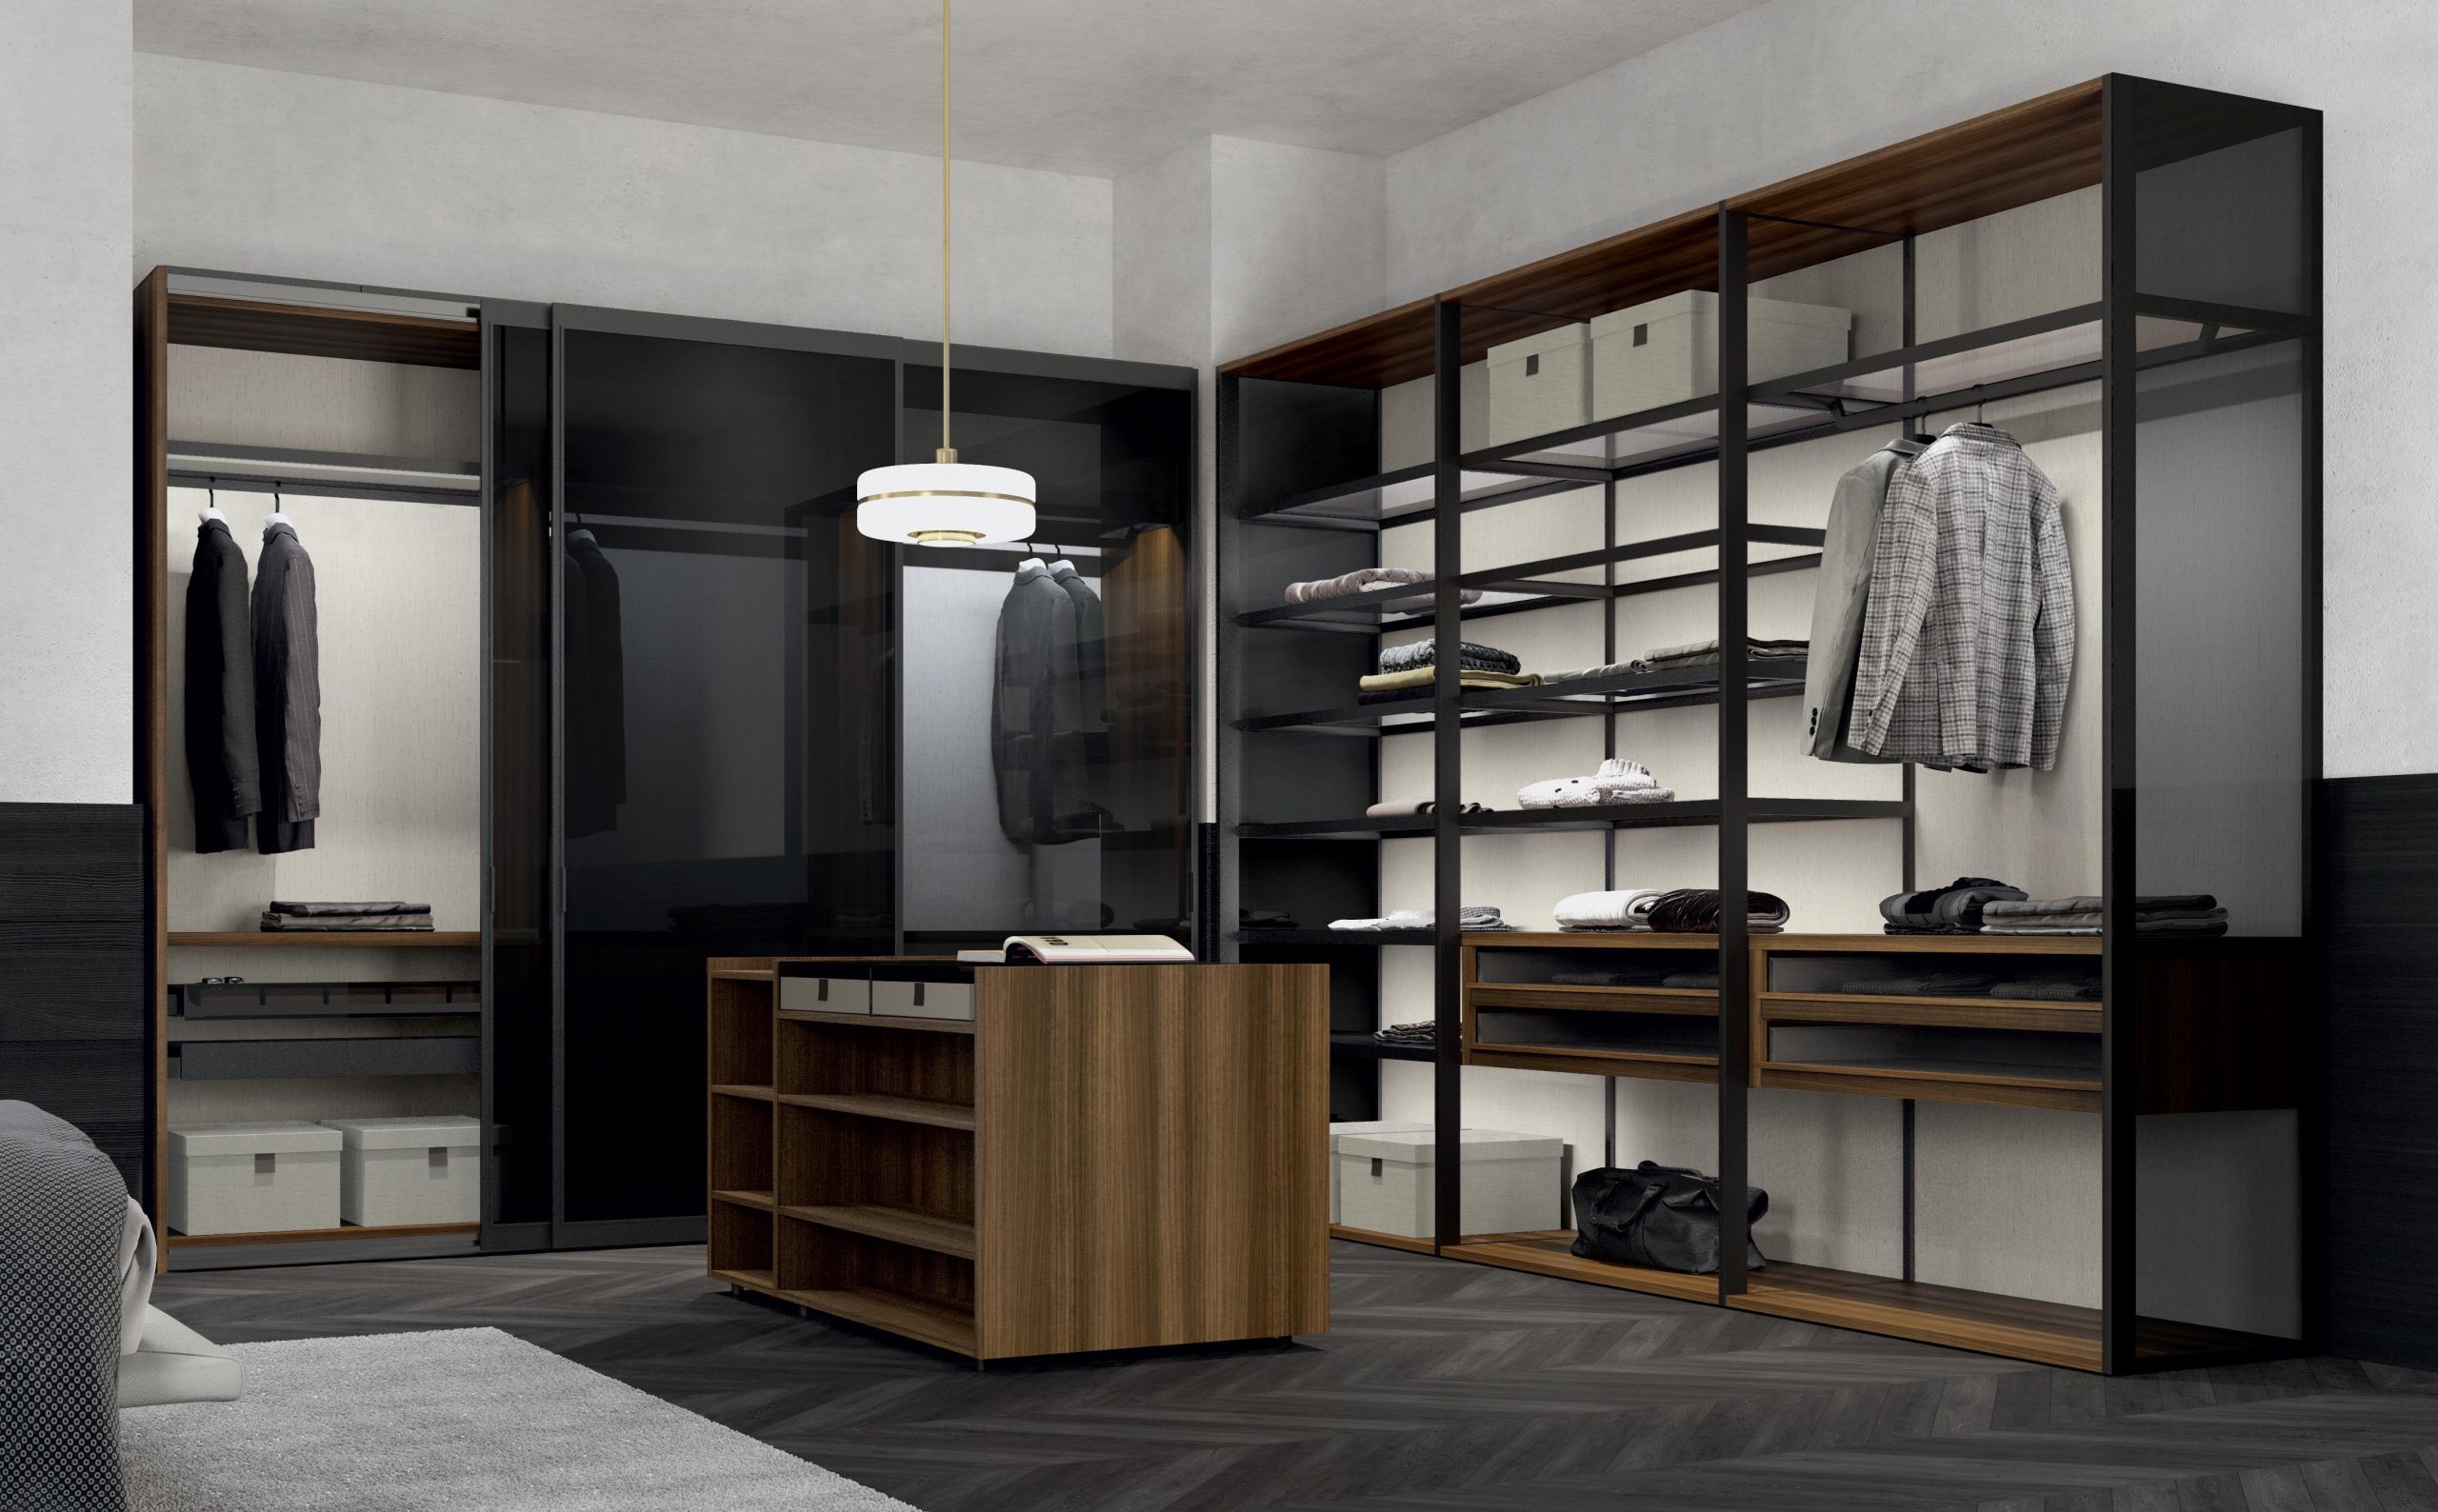 by MIEMASU | Dressing room decor, Dressing room design, Small dressing rooms